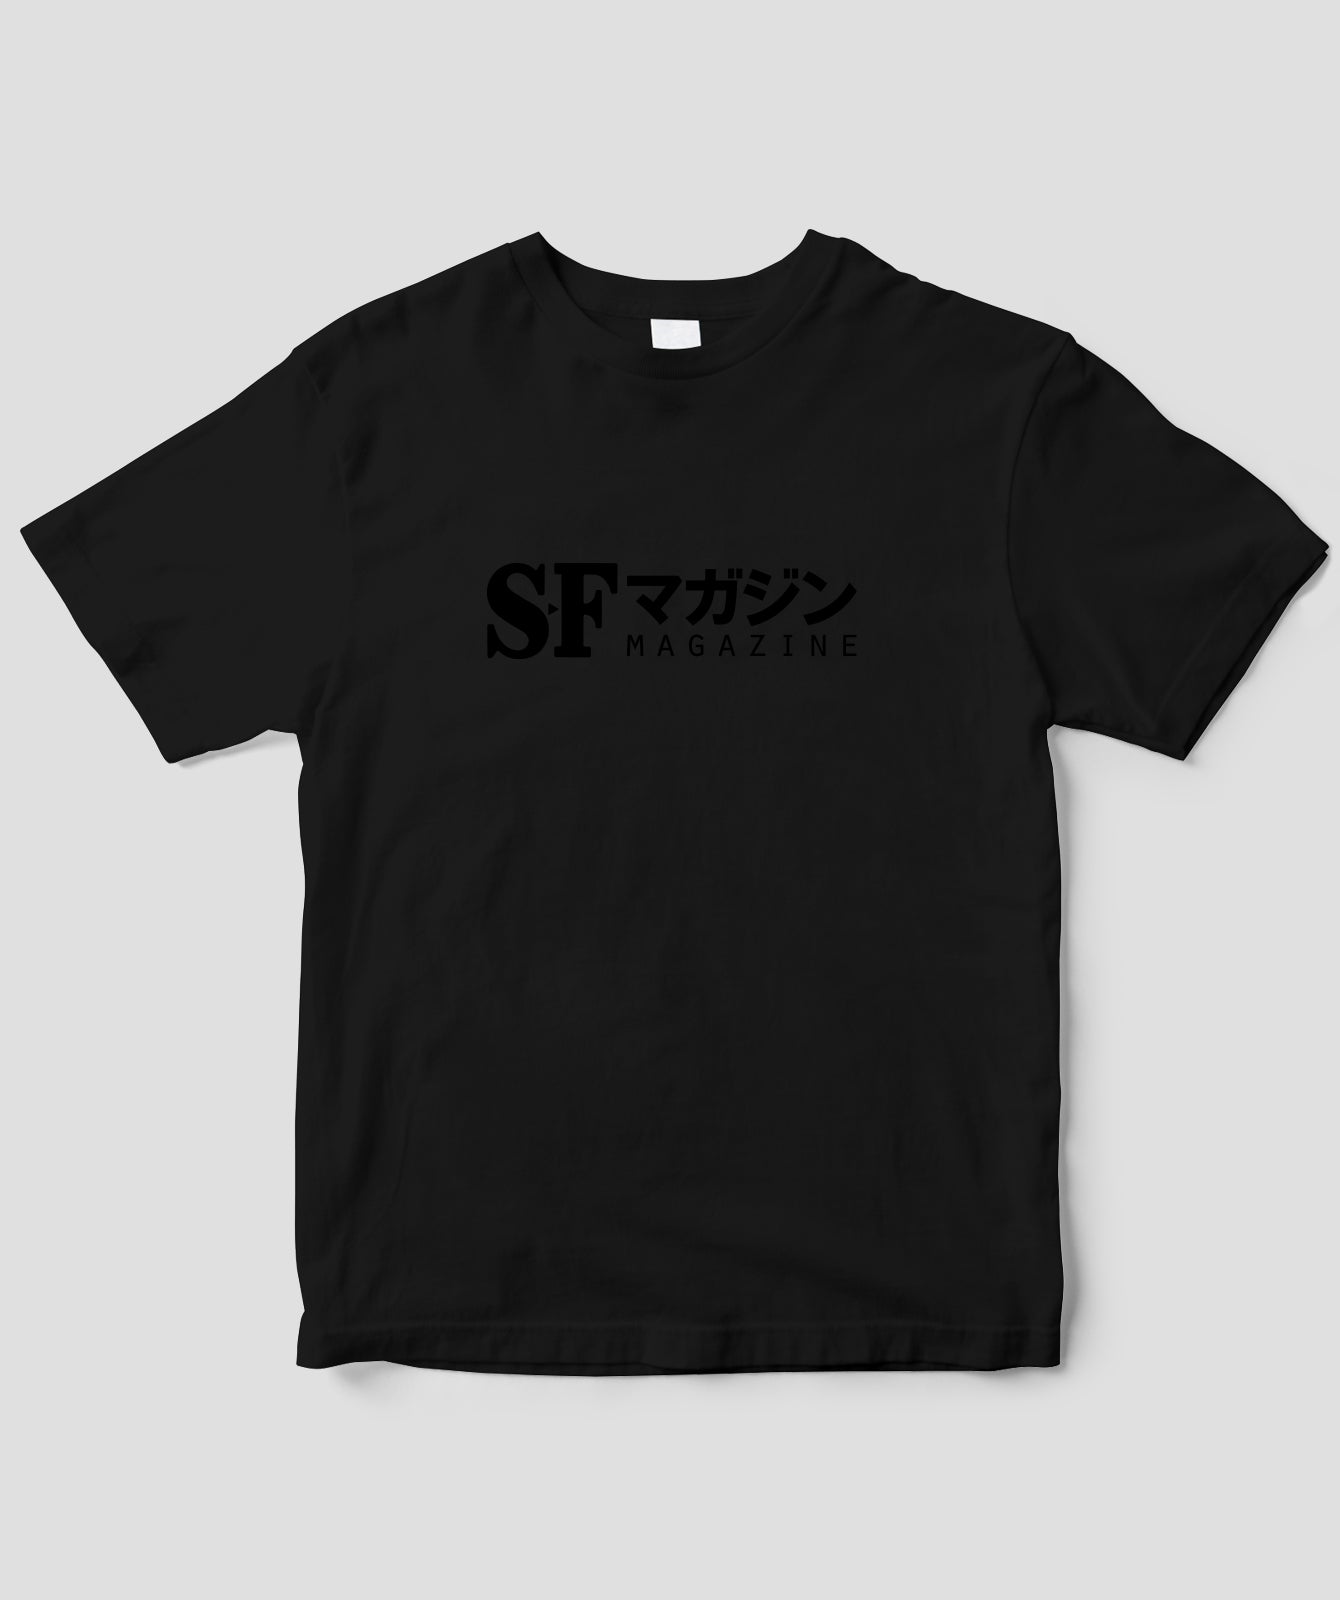 SFマガジン / ロゴT 黒×黒 / 早川書房